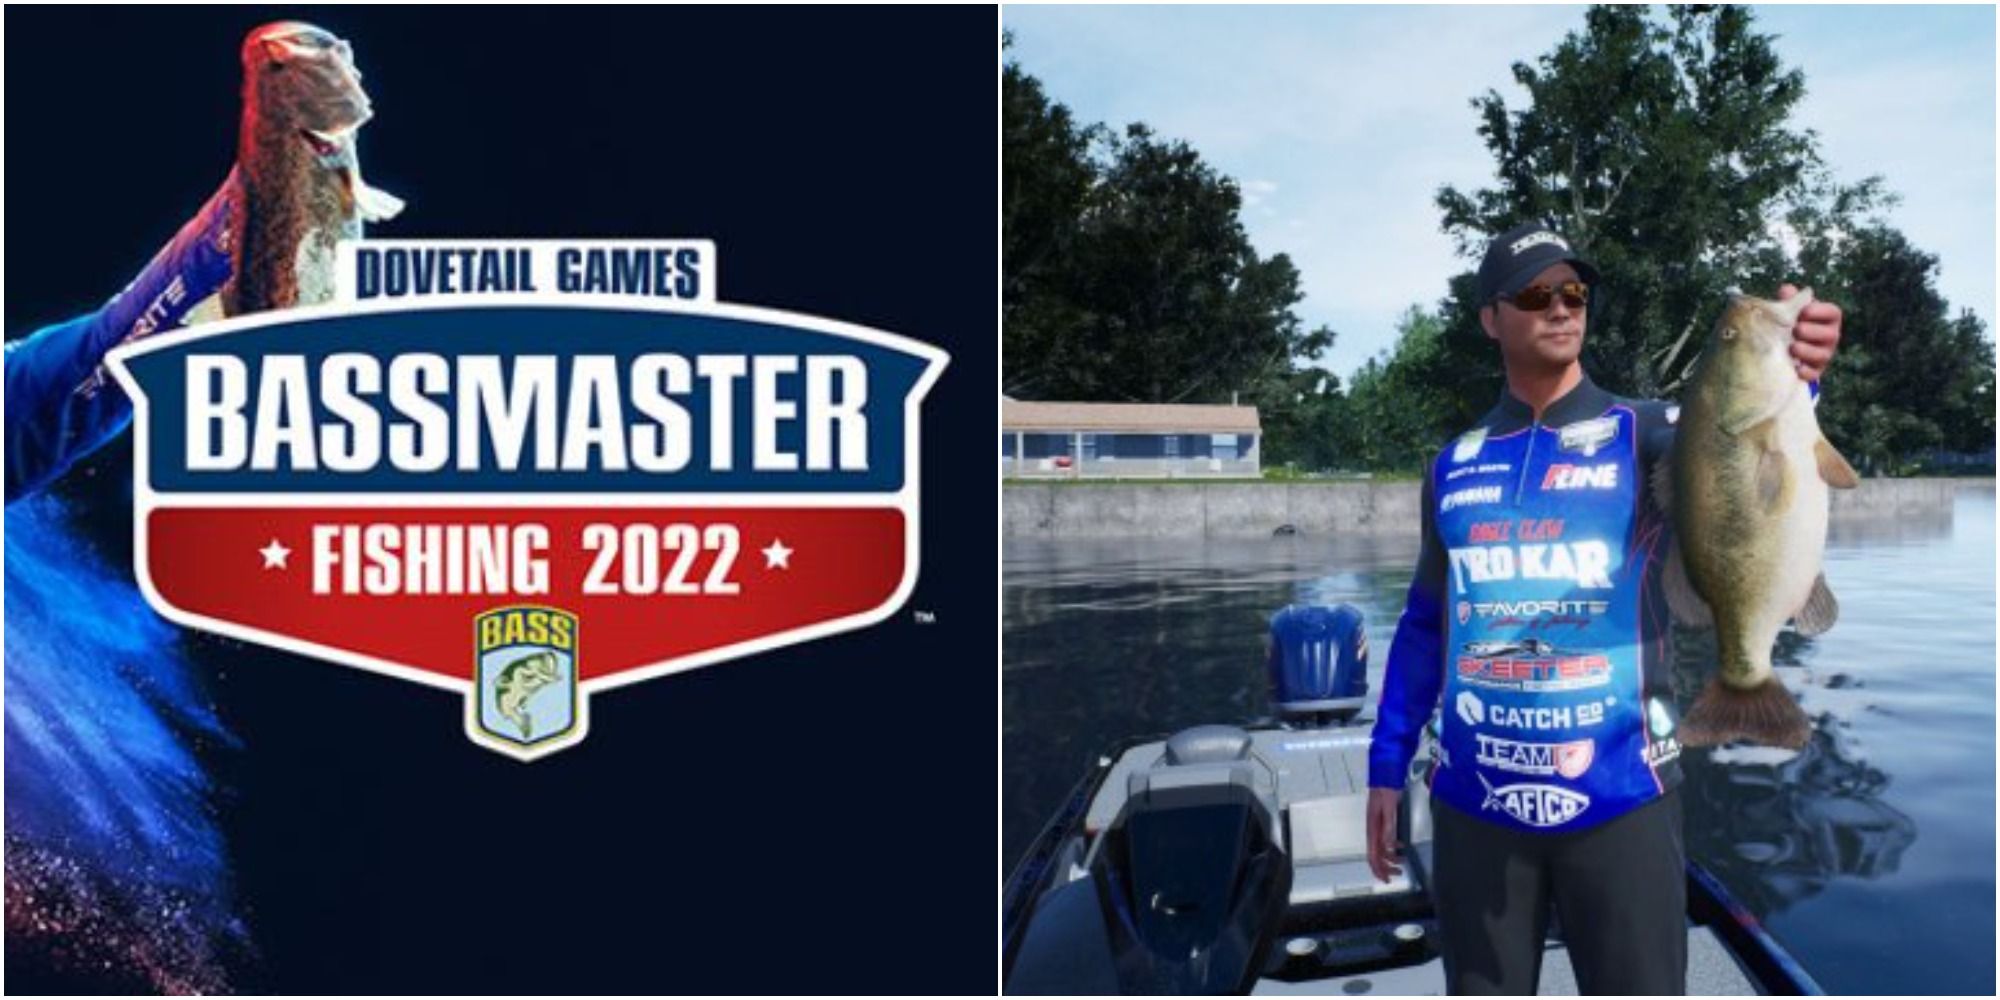 Bassmaster Fishing 2022: Every Venue, Ranked